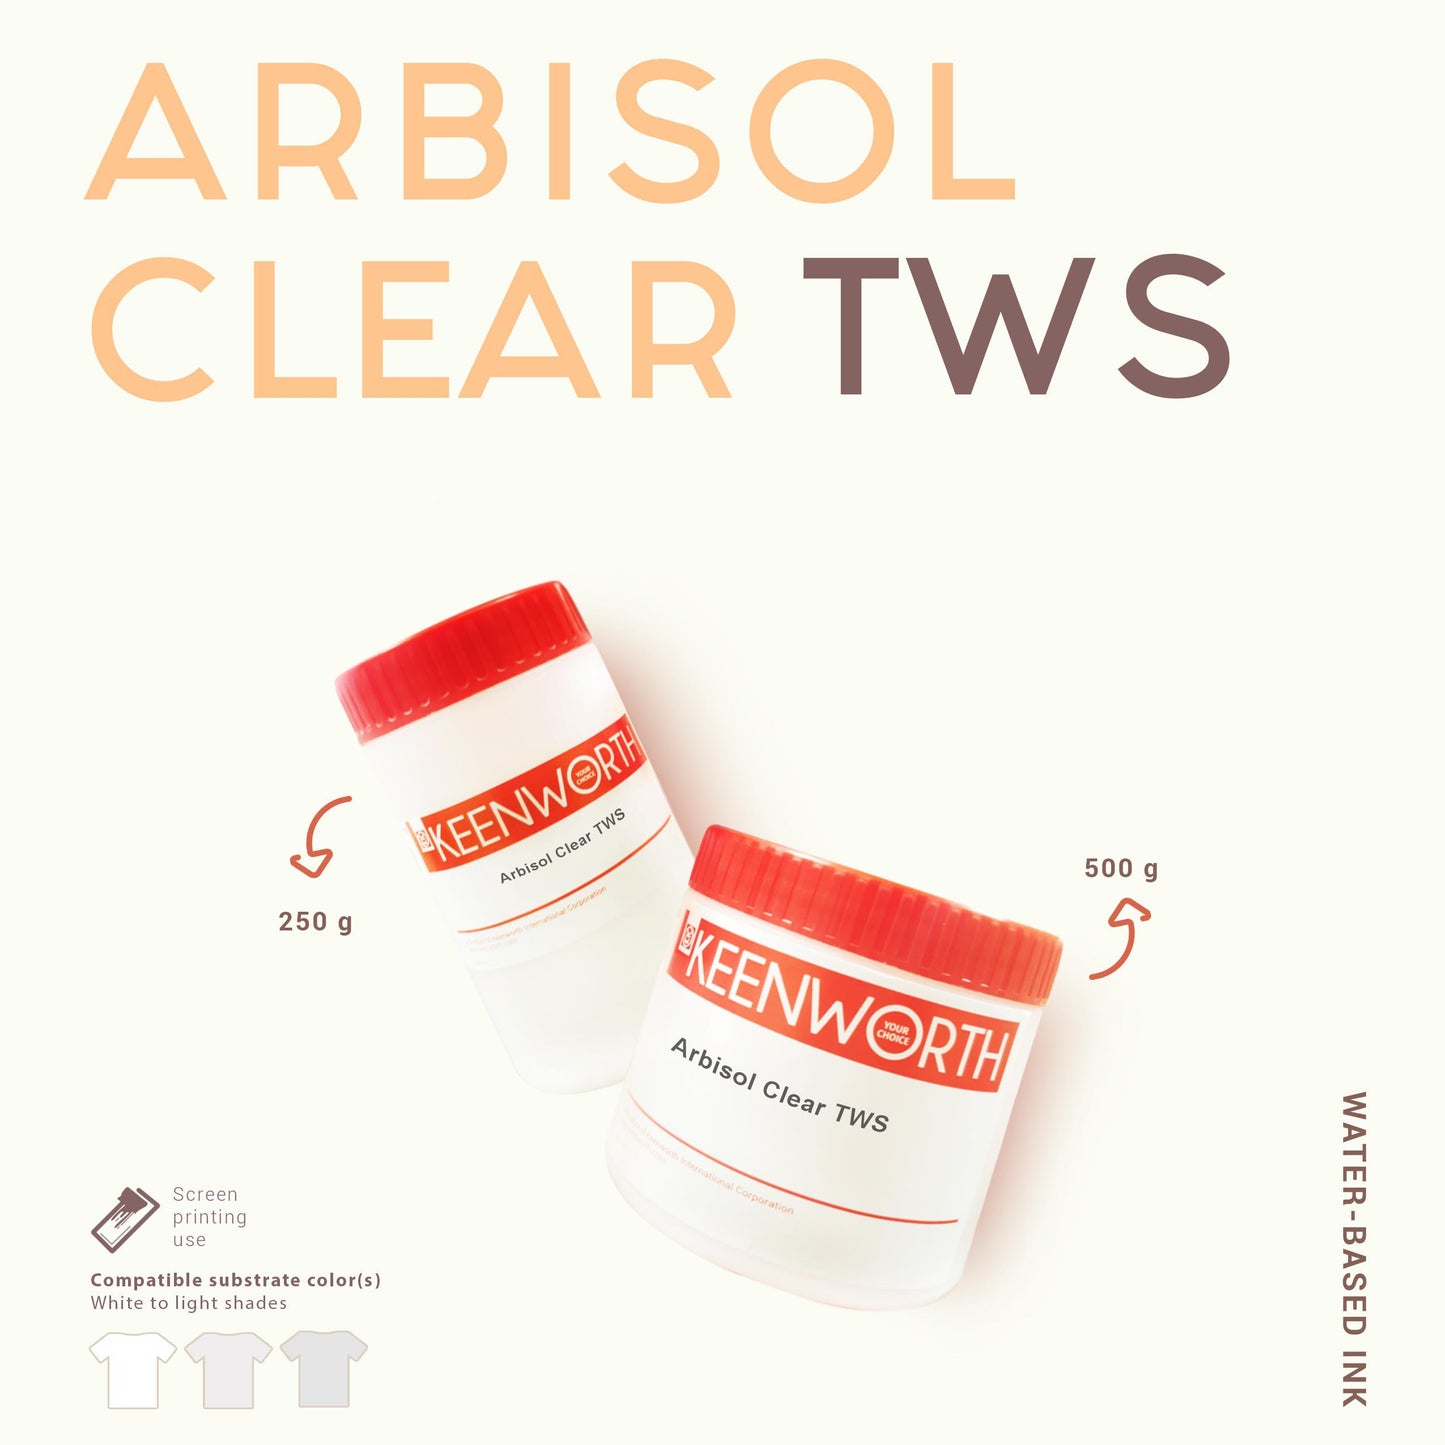 Arbisol Clear TWS